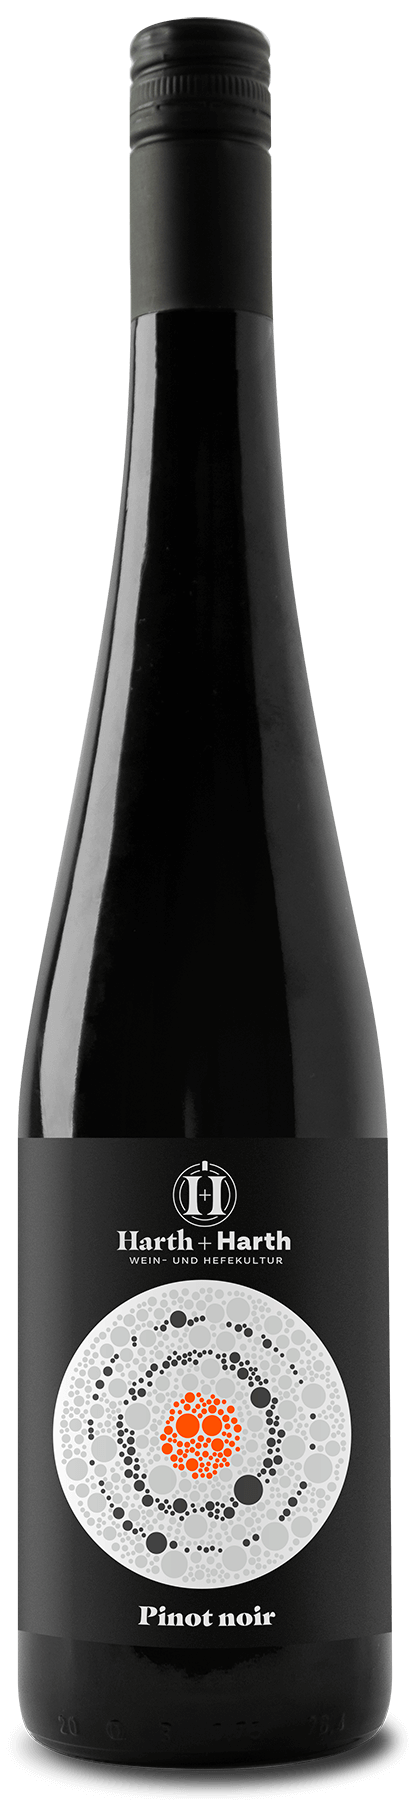 Abbildung: Harth und Harth Pinot noir 2017